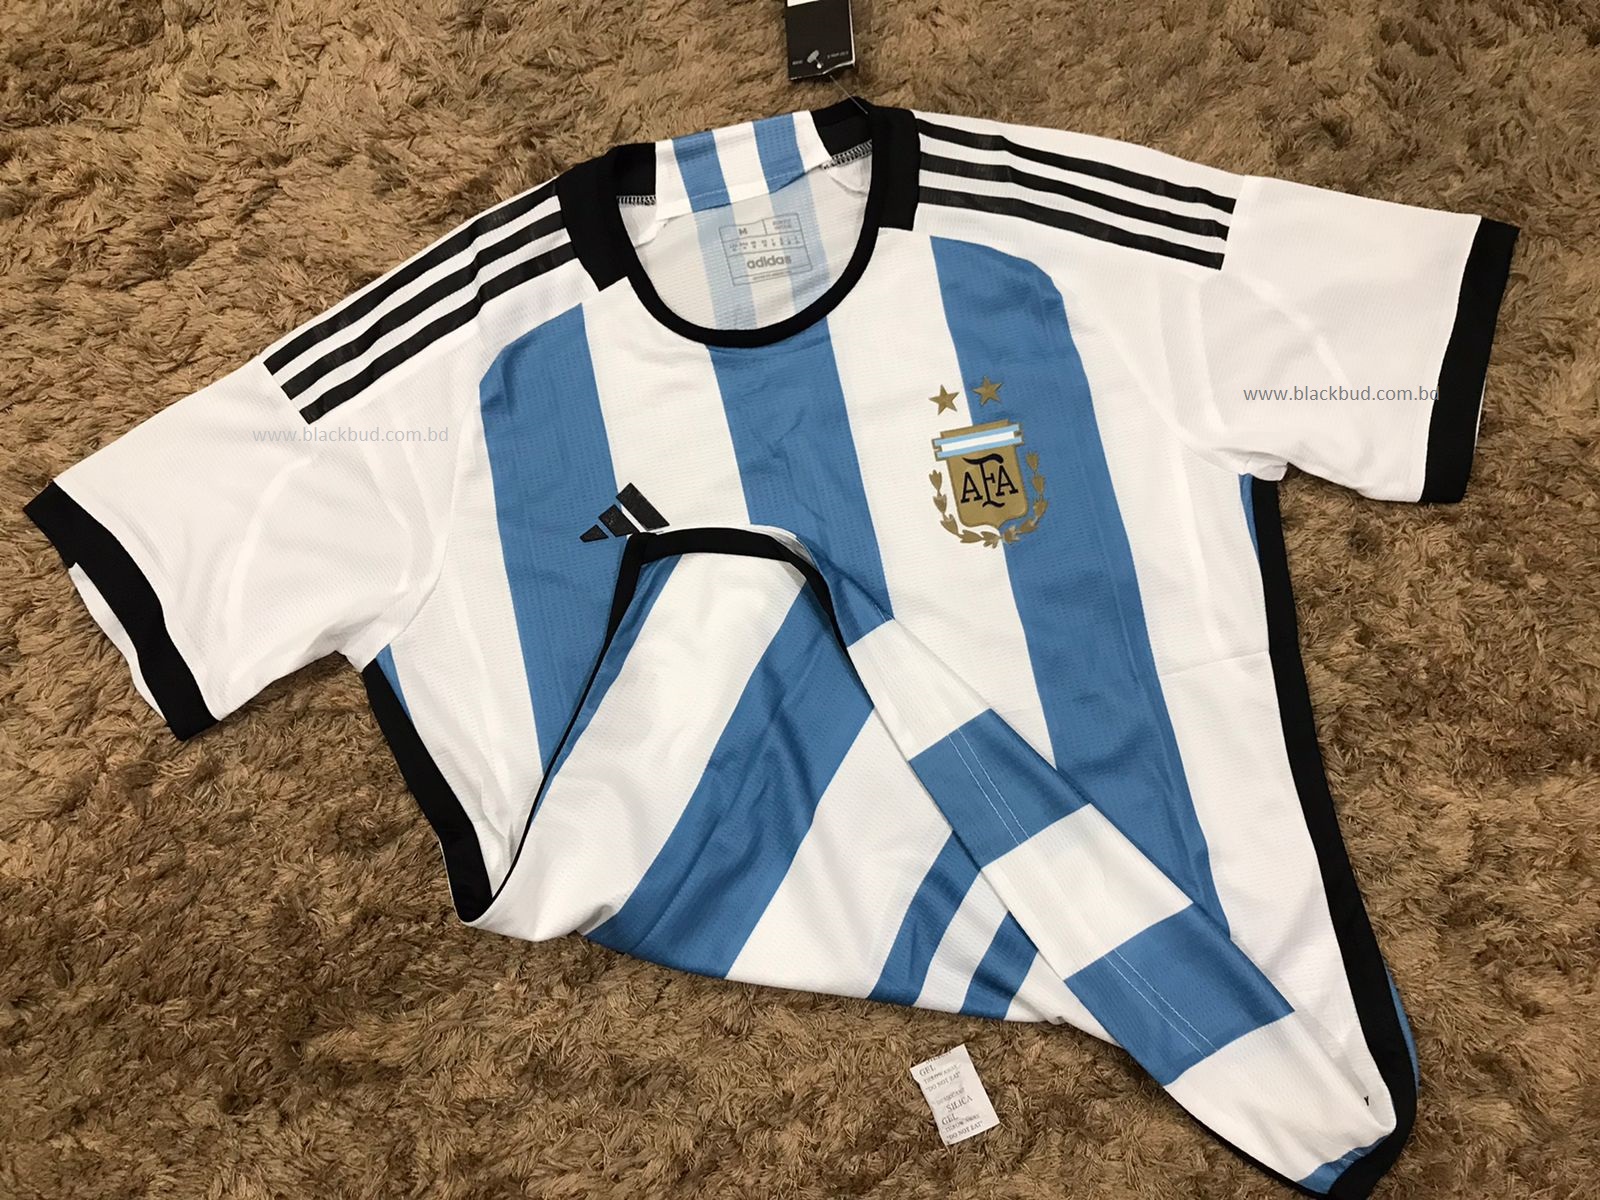 argentina away jersey price in bangladesh,